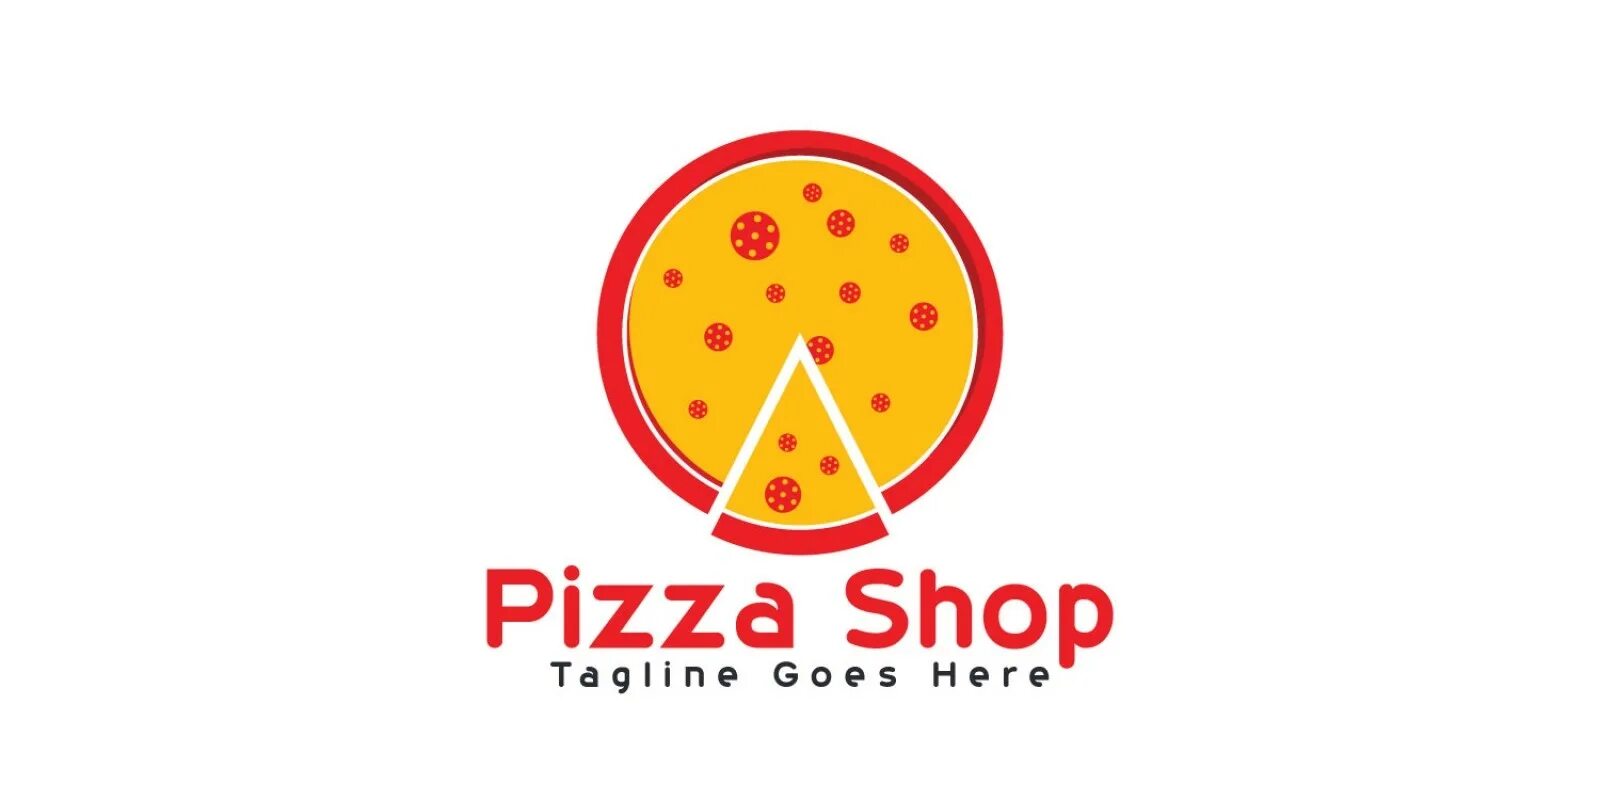 Store pizzeria. Пицца в магазине. Логотип для магазины пиццы. Картинки магазина пиццы. Логотип пицца шоп.